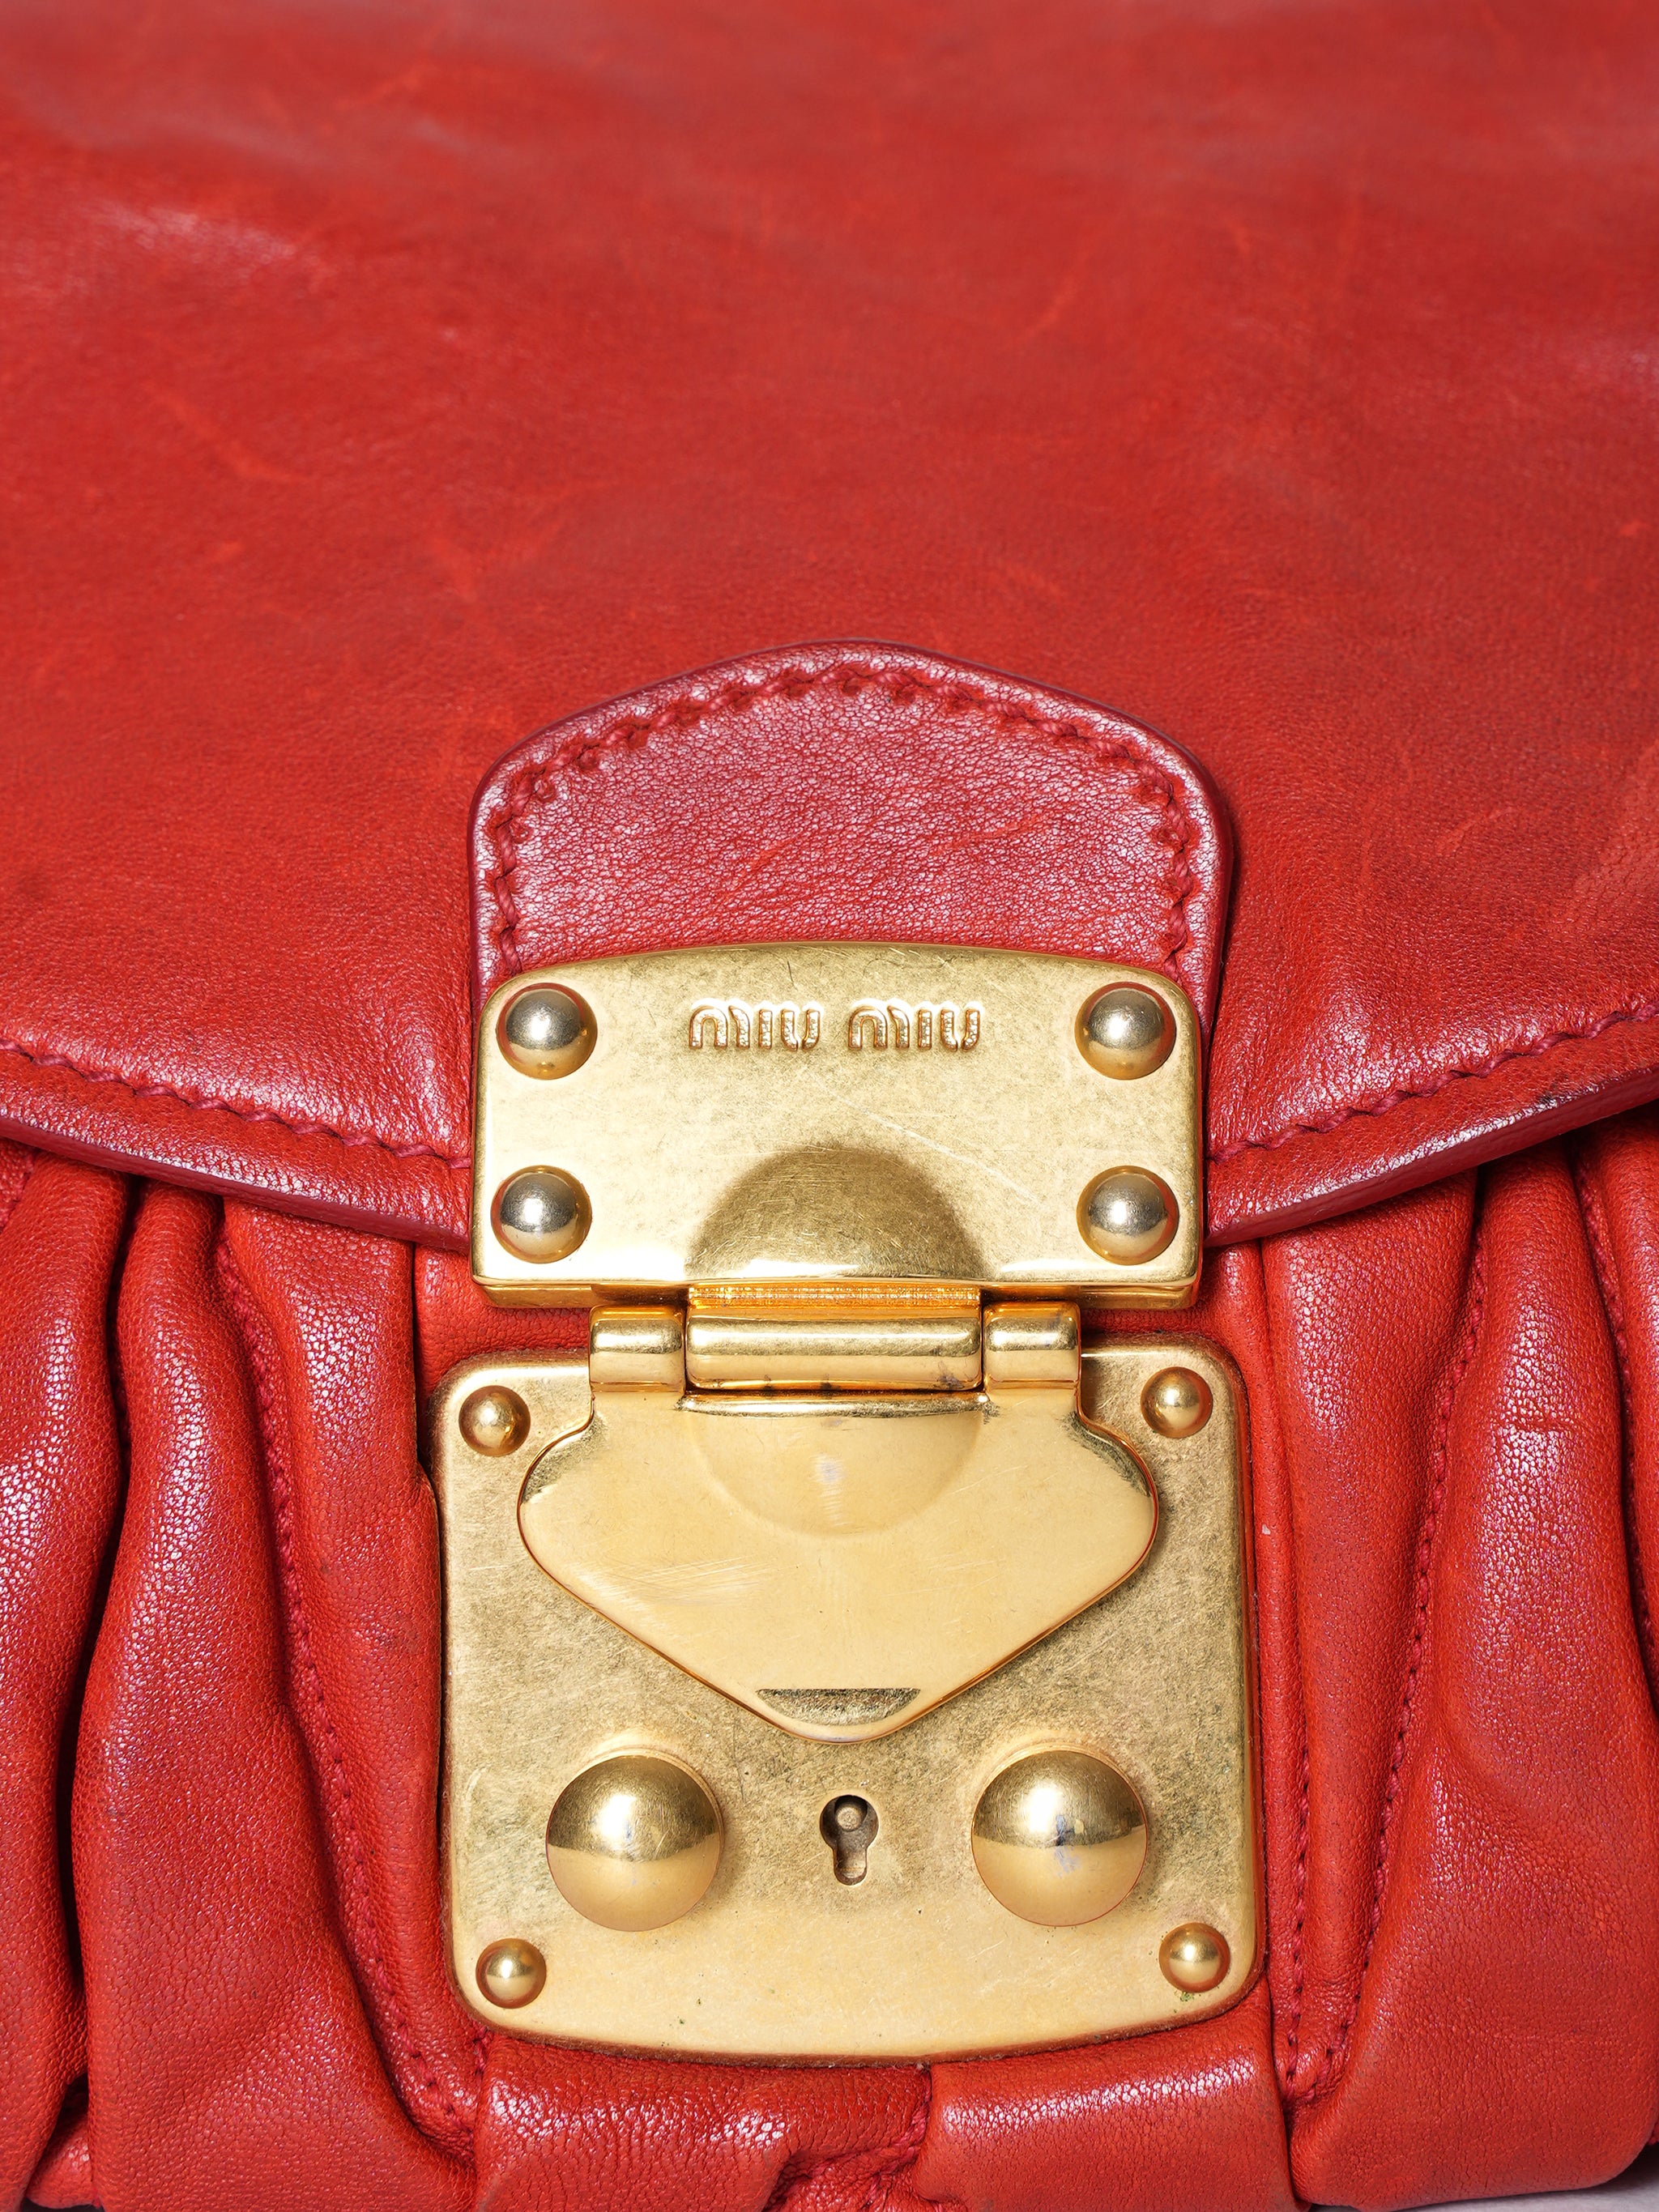 Miu Miu Red Handbag